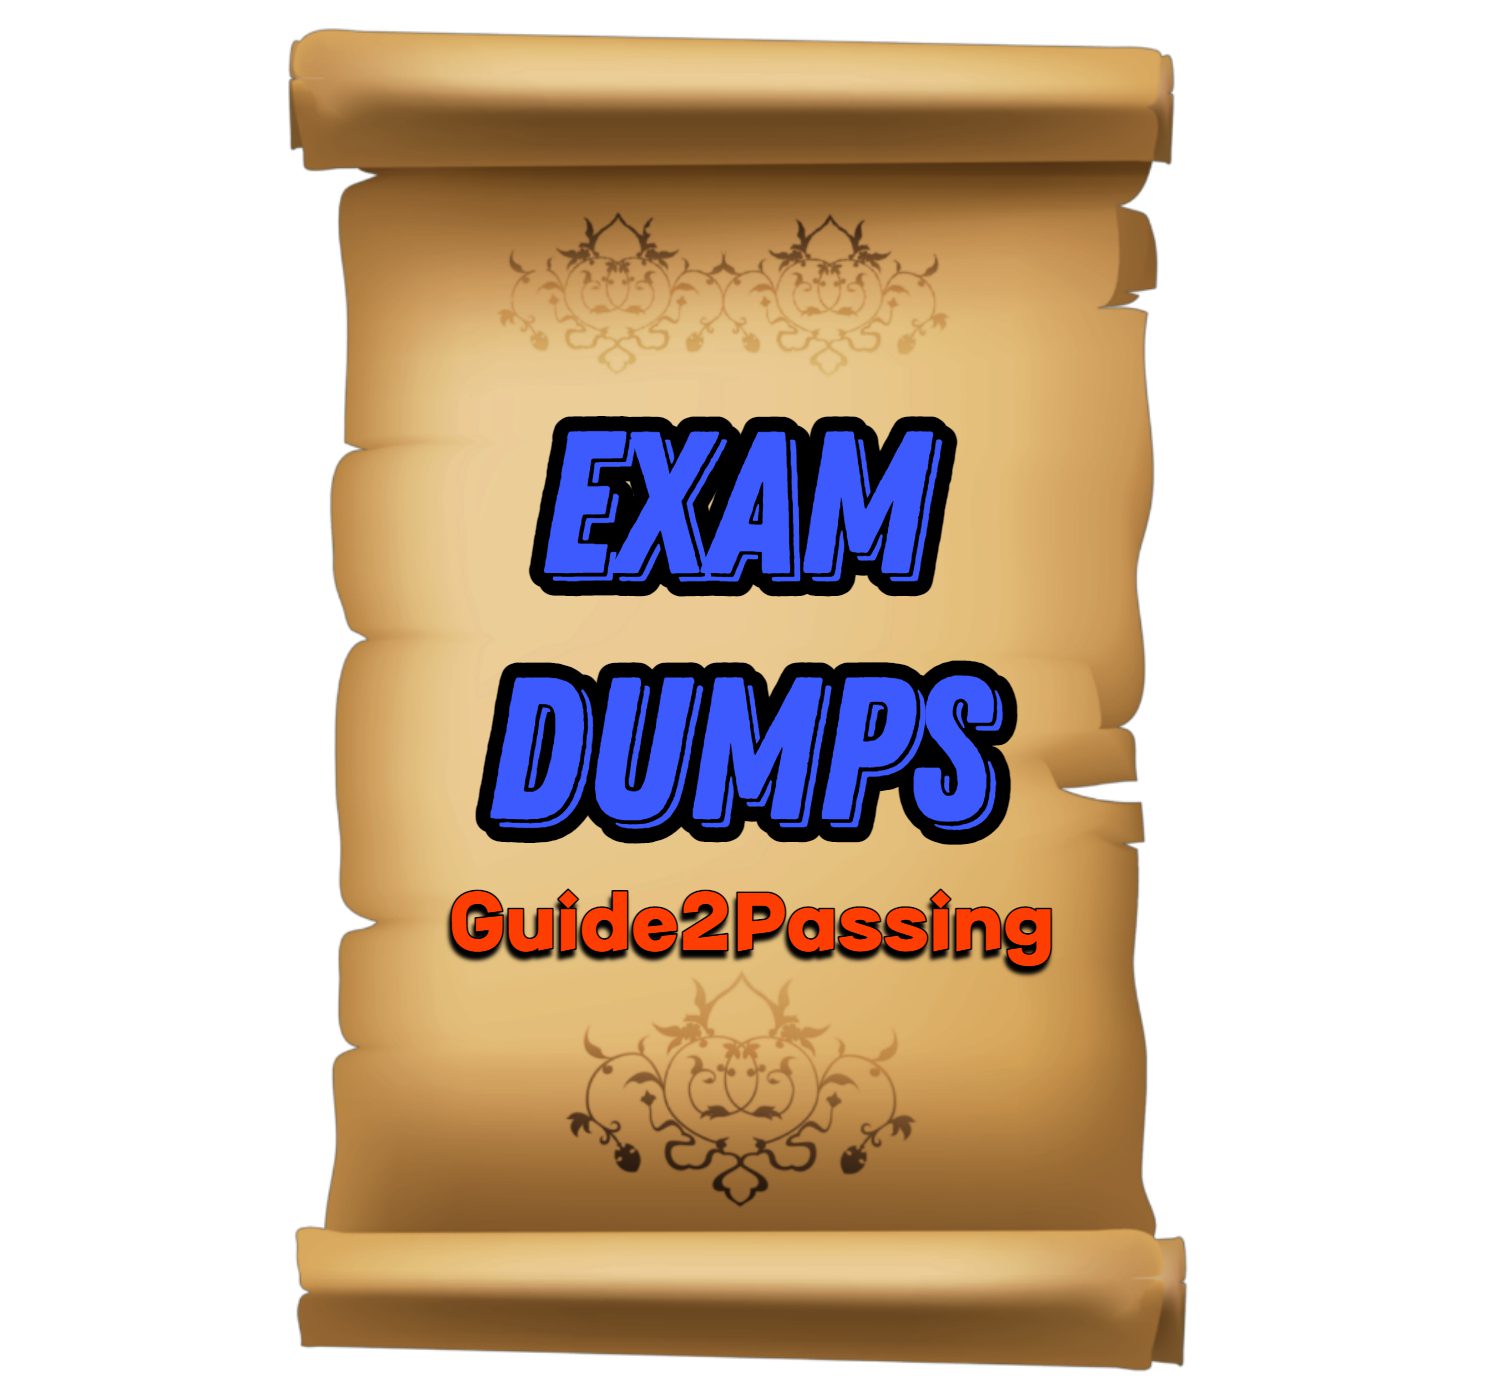 Best Exam Dump Sites boost Guide 2 Passing For Exam Dumps